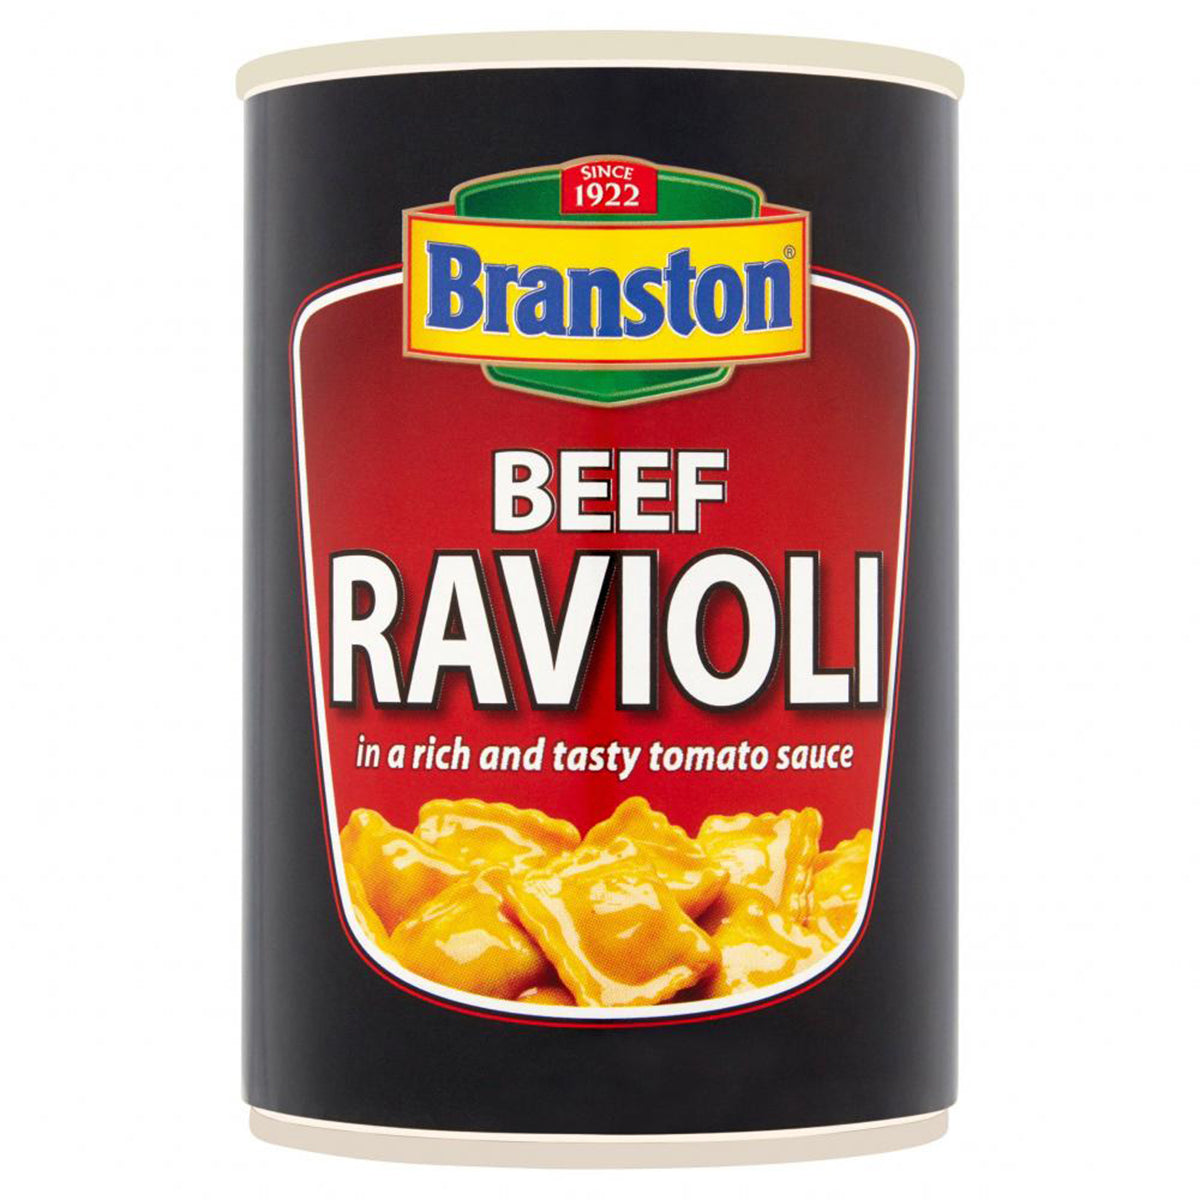 Branston - Beef Ravioli in Tomato Sauce - 395g - Continental Food Store